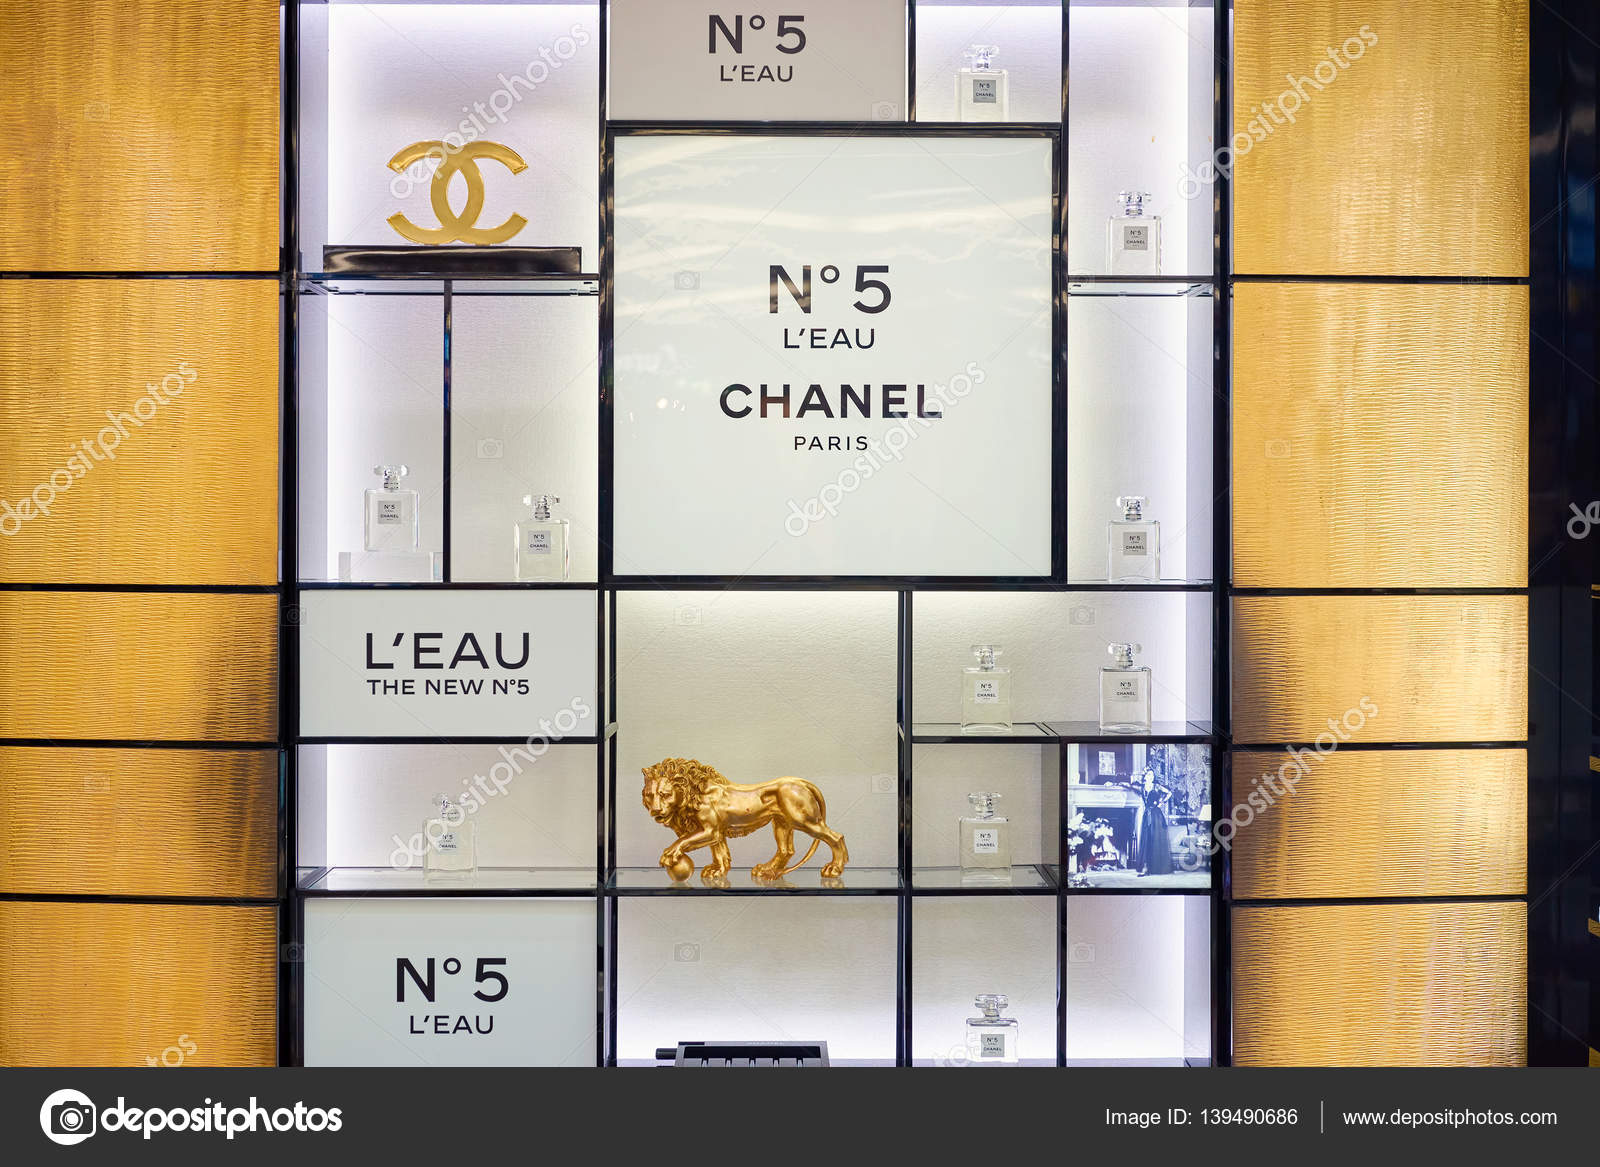 Chanel: perfume and cosmetics